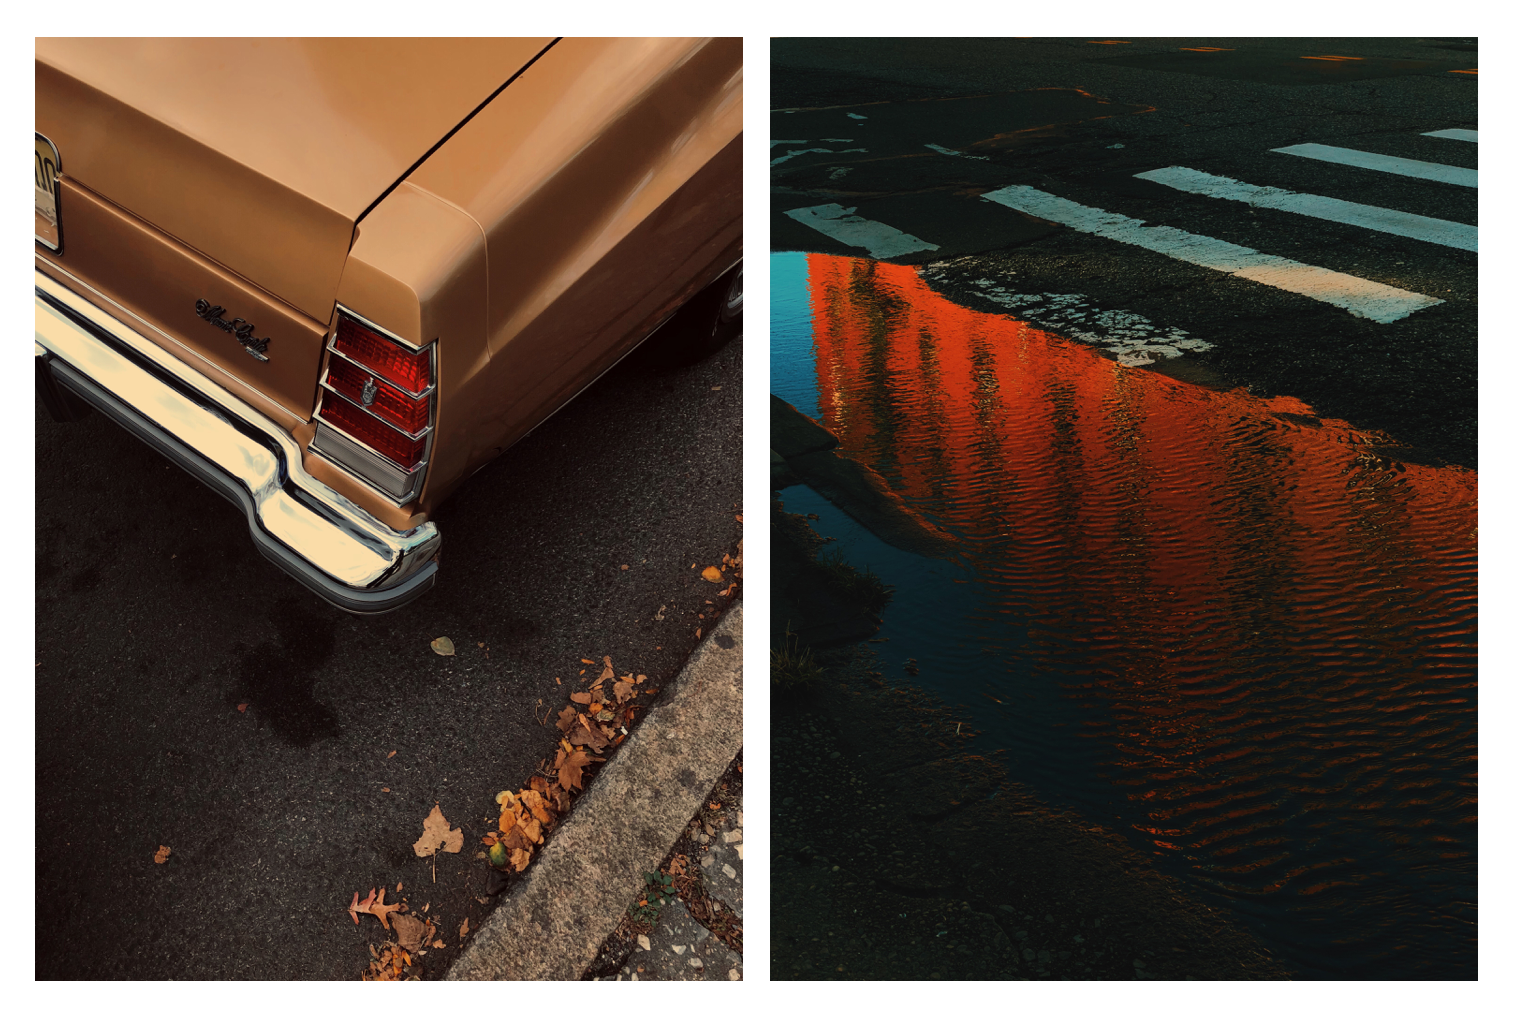 Eric Van Nynatten's "Shot on iPhone" Series